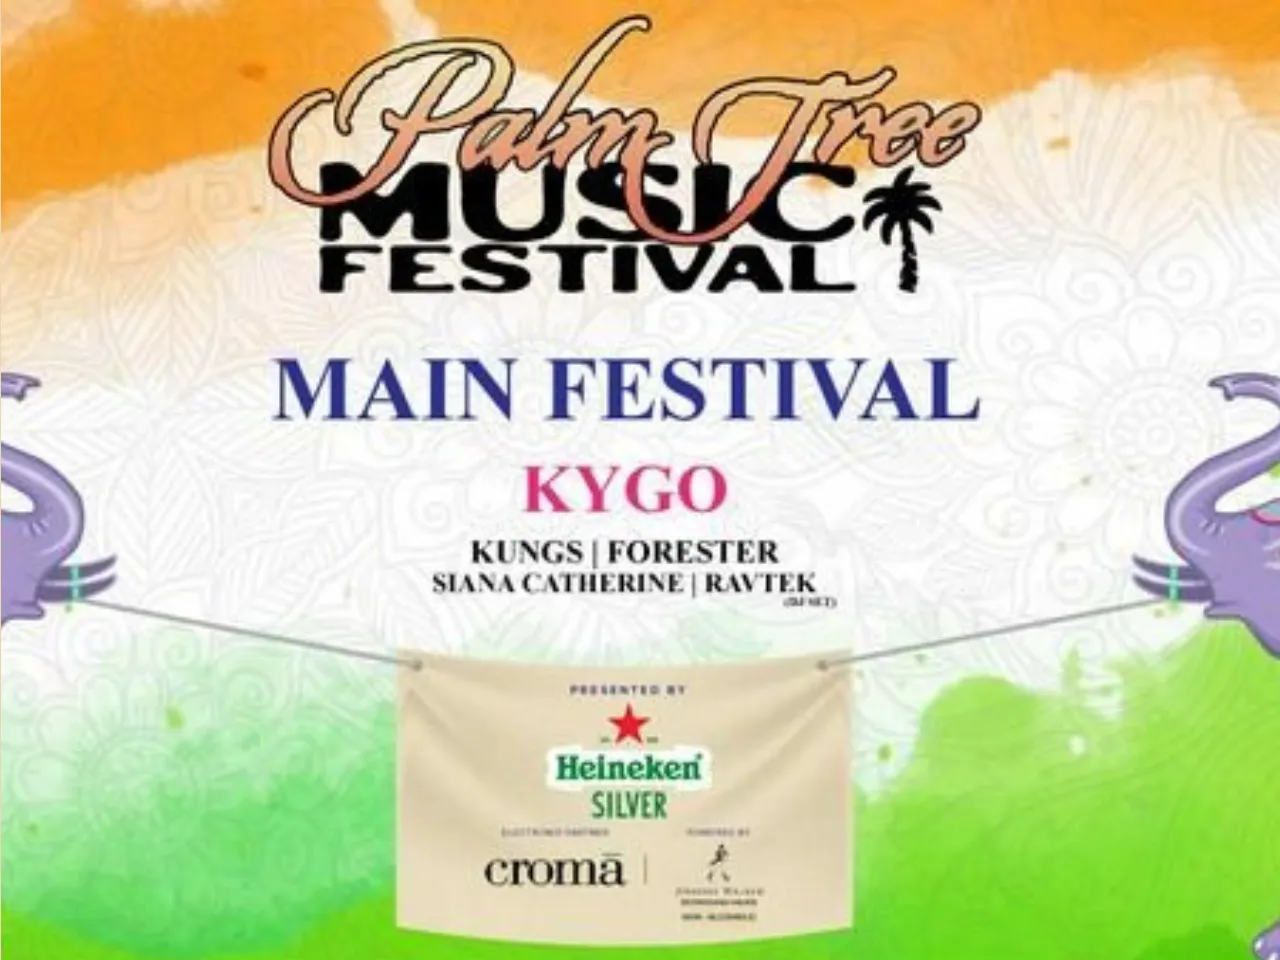 Palm music festival